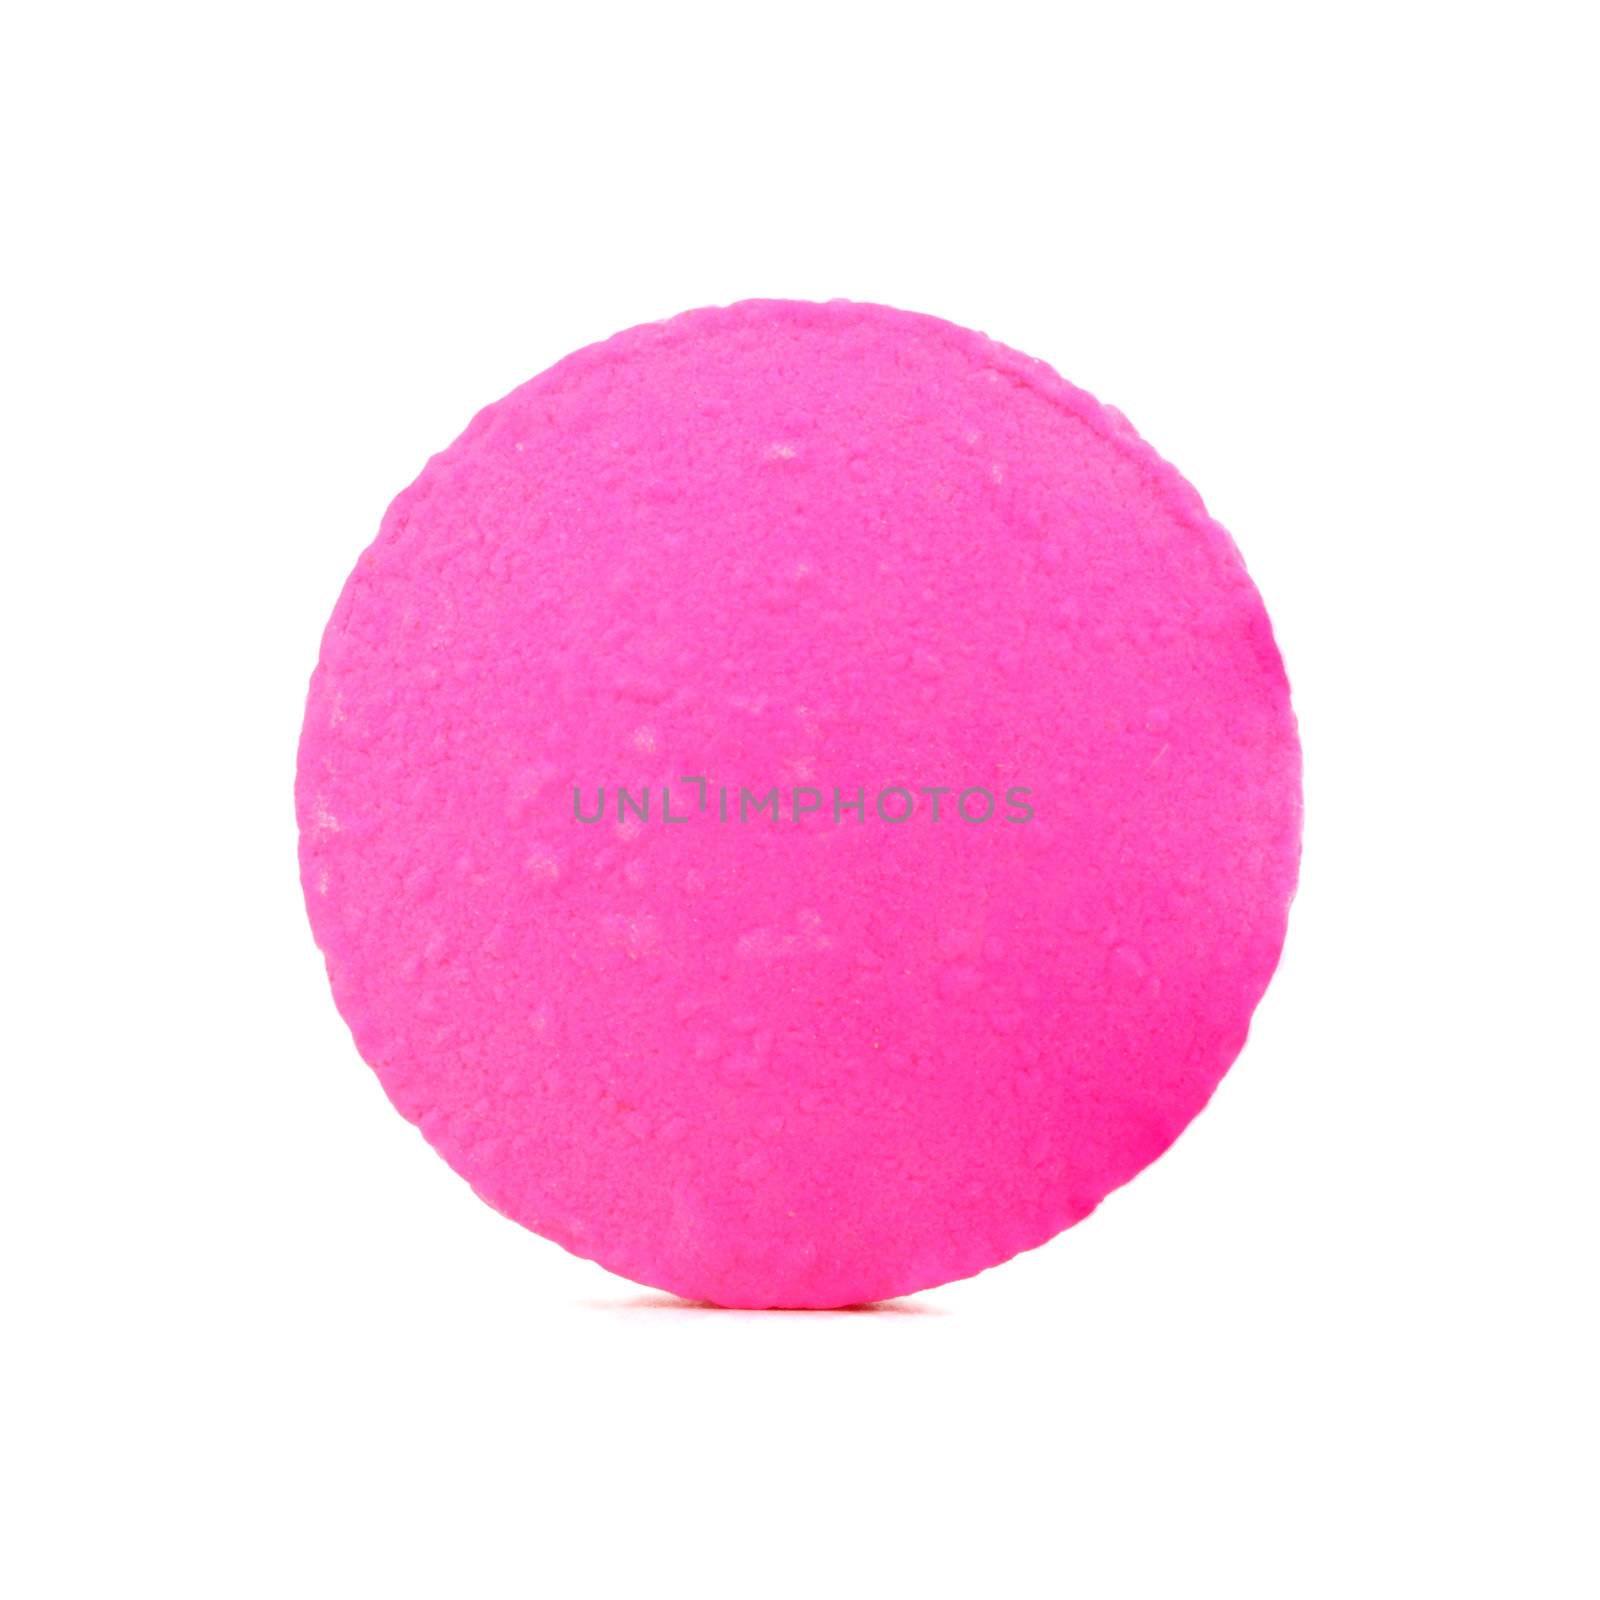 single pink pill by geargodz